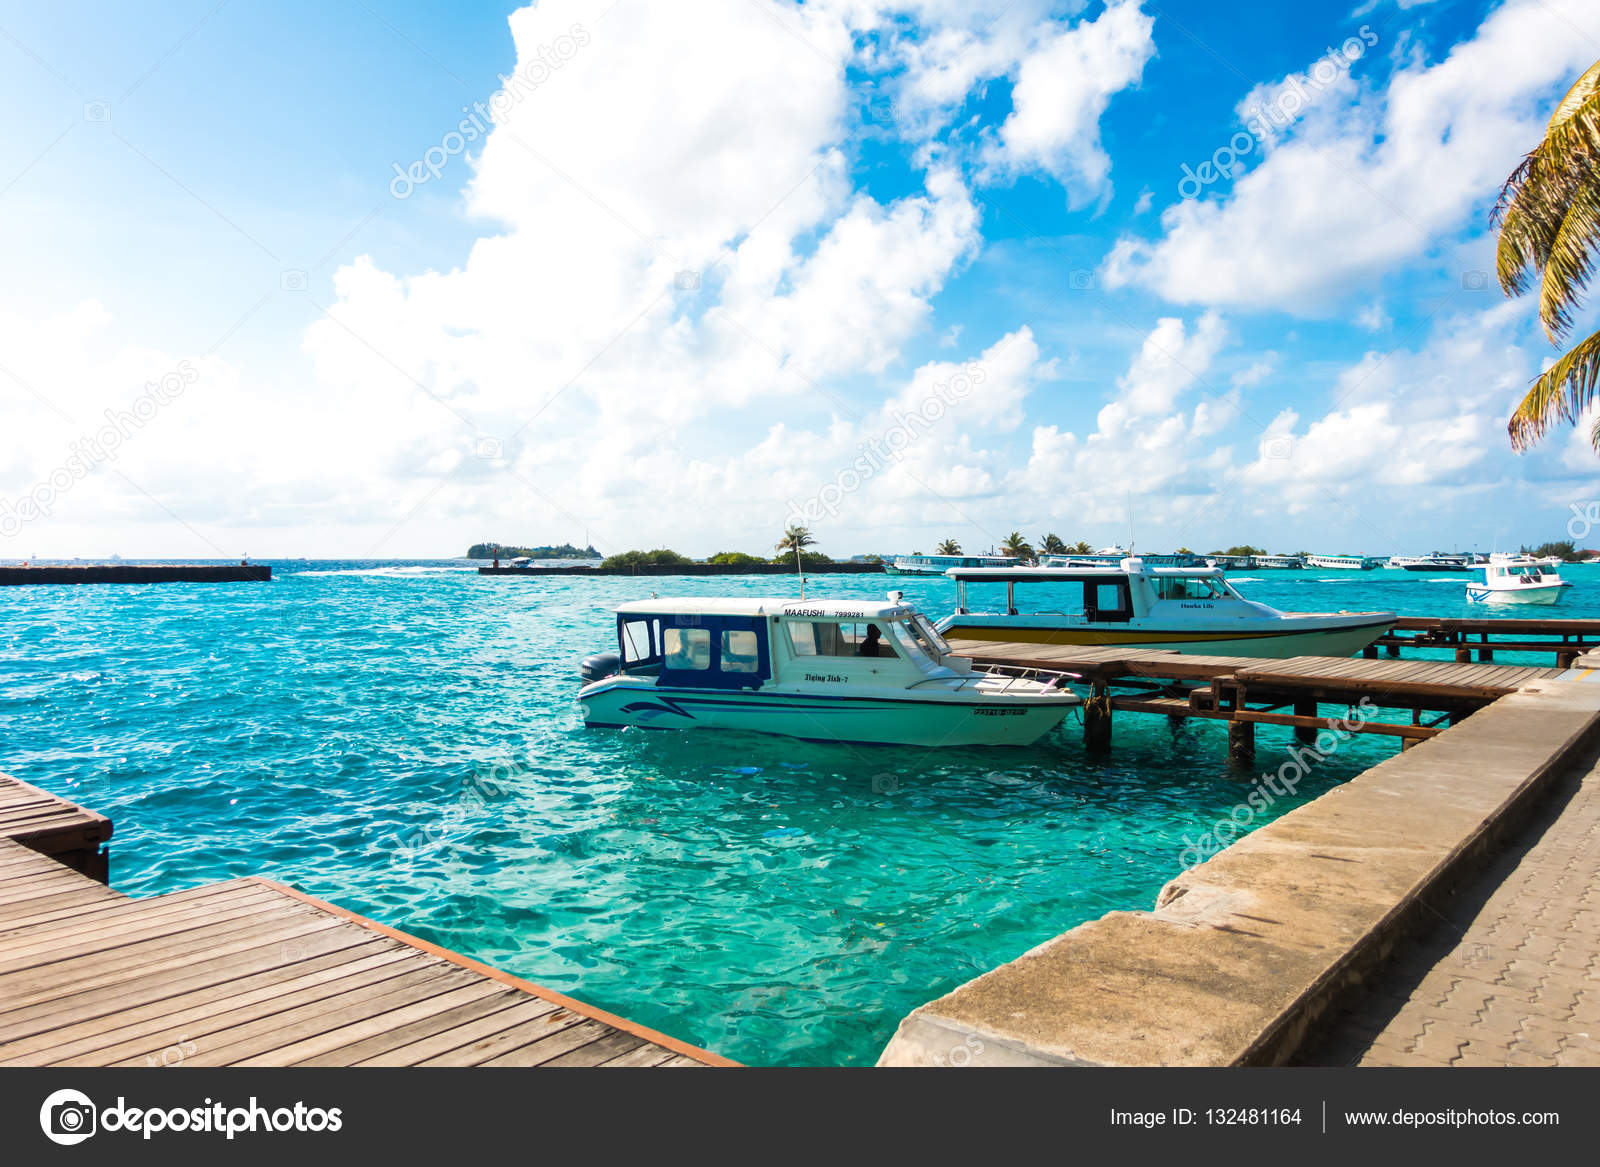 https://st3.depositphotos.com/1164721/13248/i/1600/depositphotos_132481164-stock-photo-male-maldives-october-04-boats.jpg